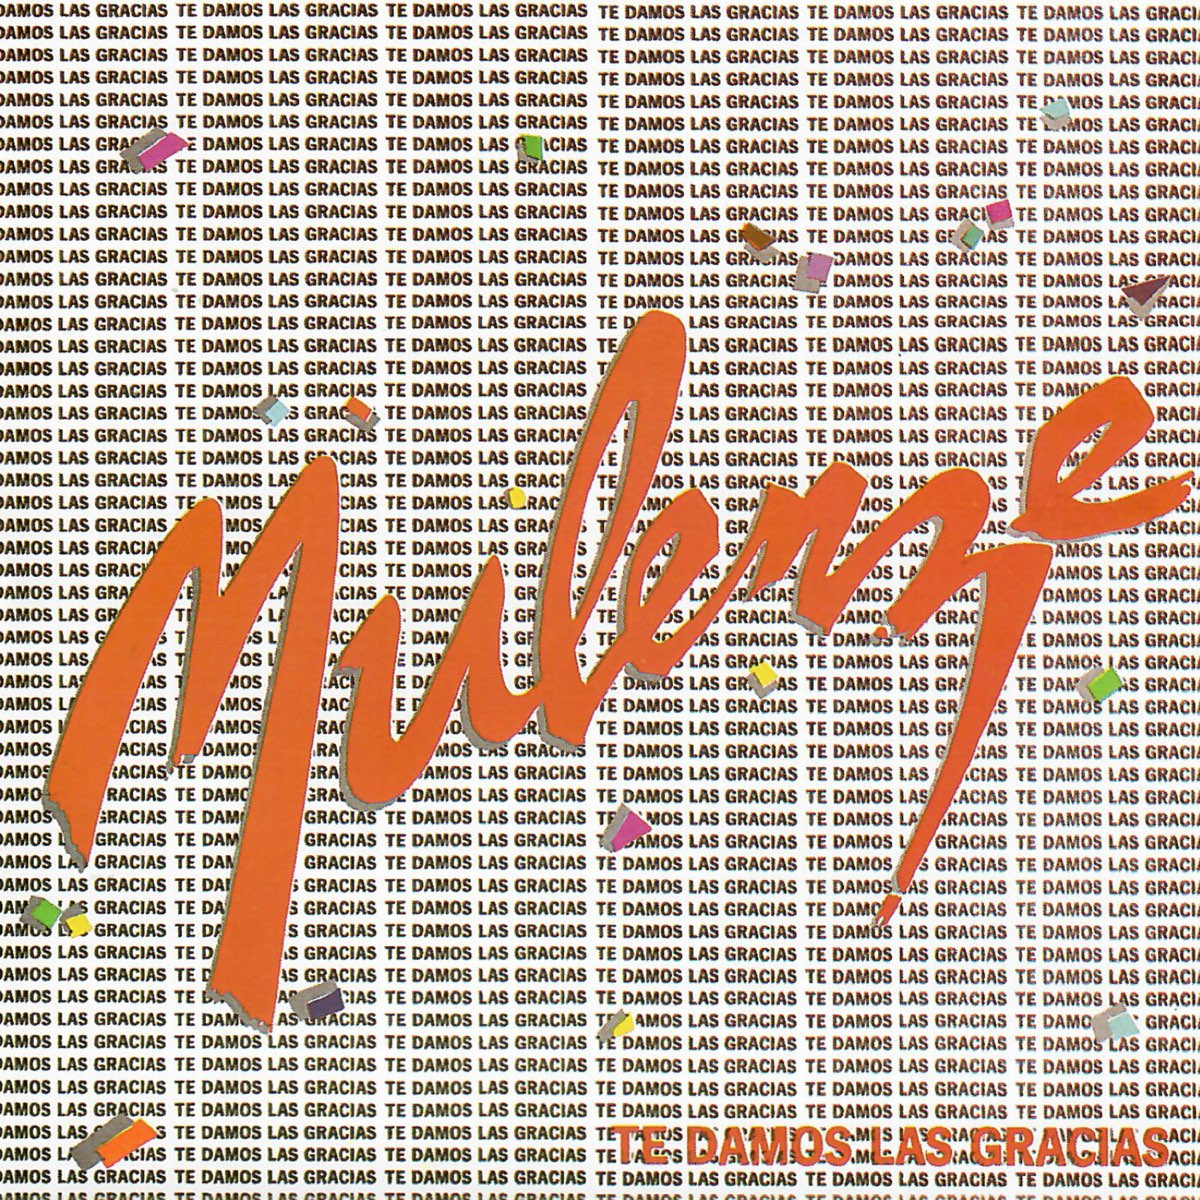 Te Damos las Gracias - Album by Mulenze - Apple Music